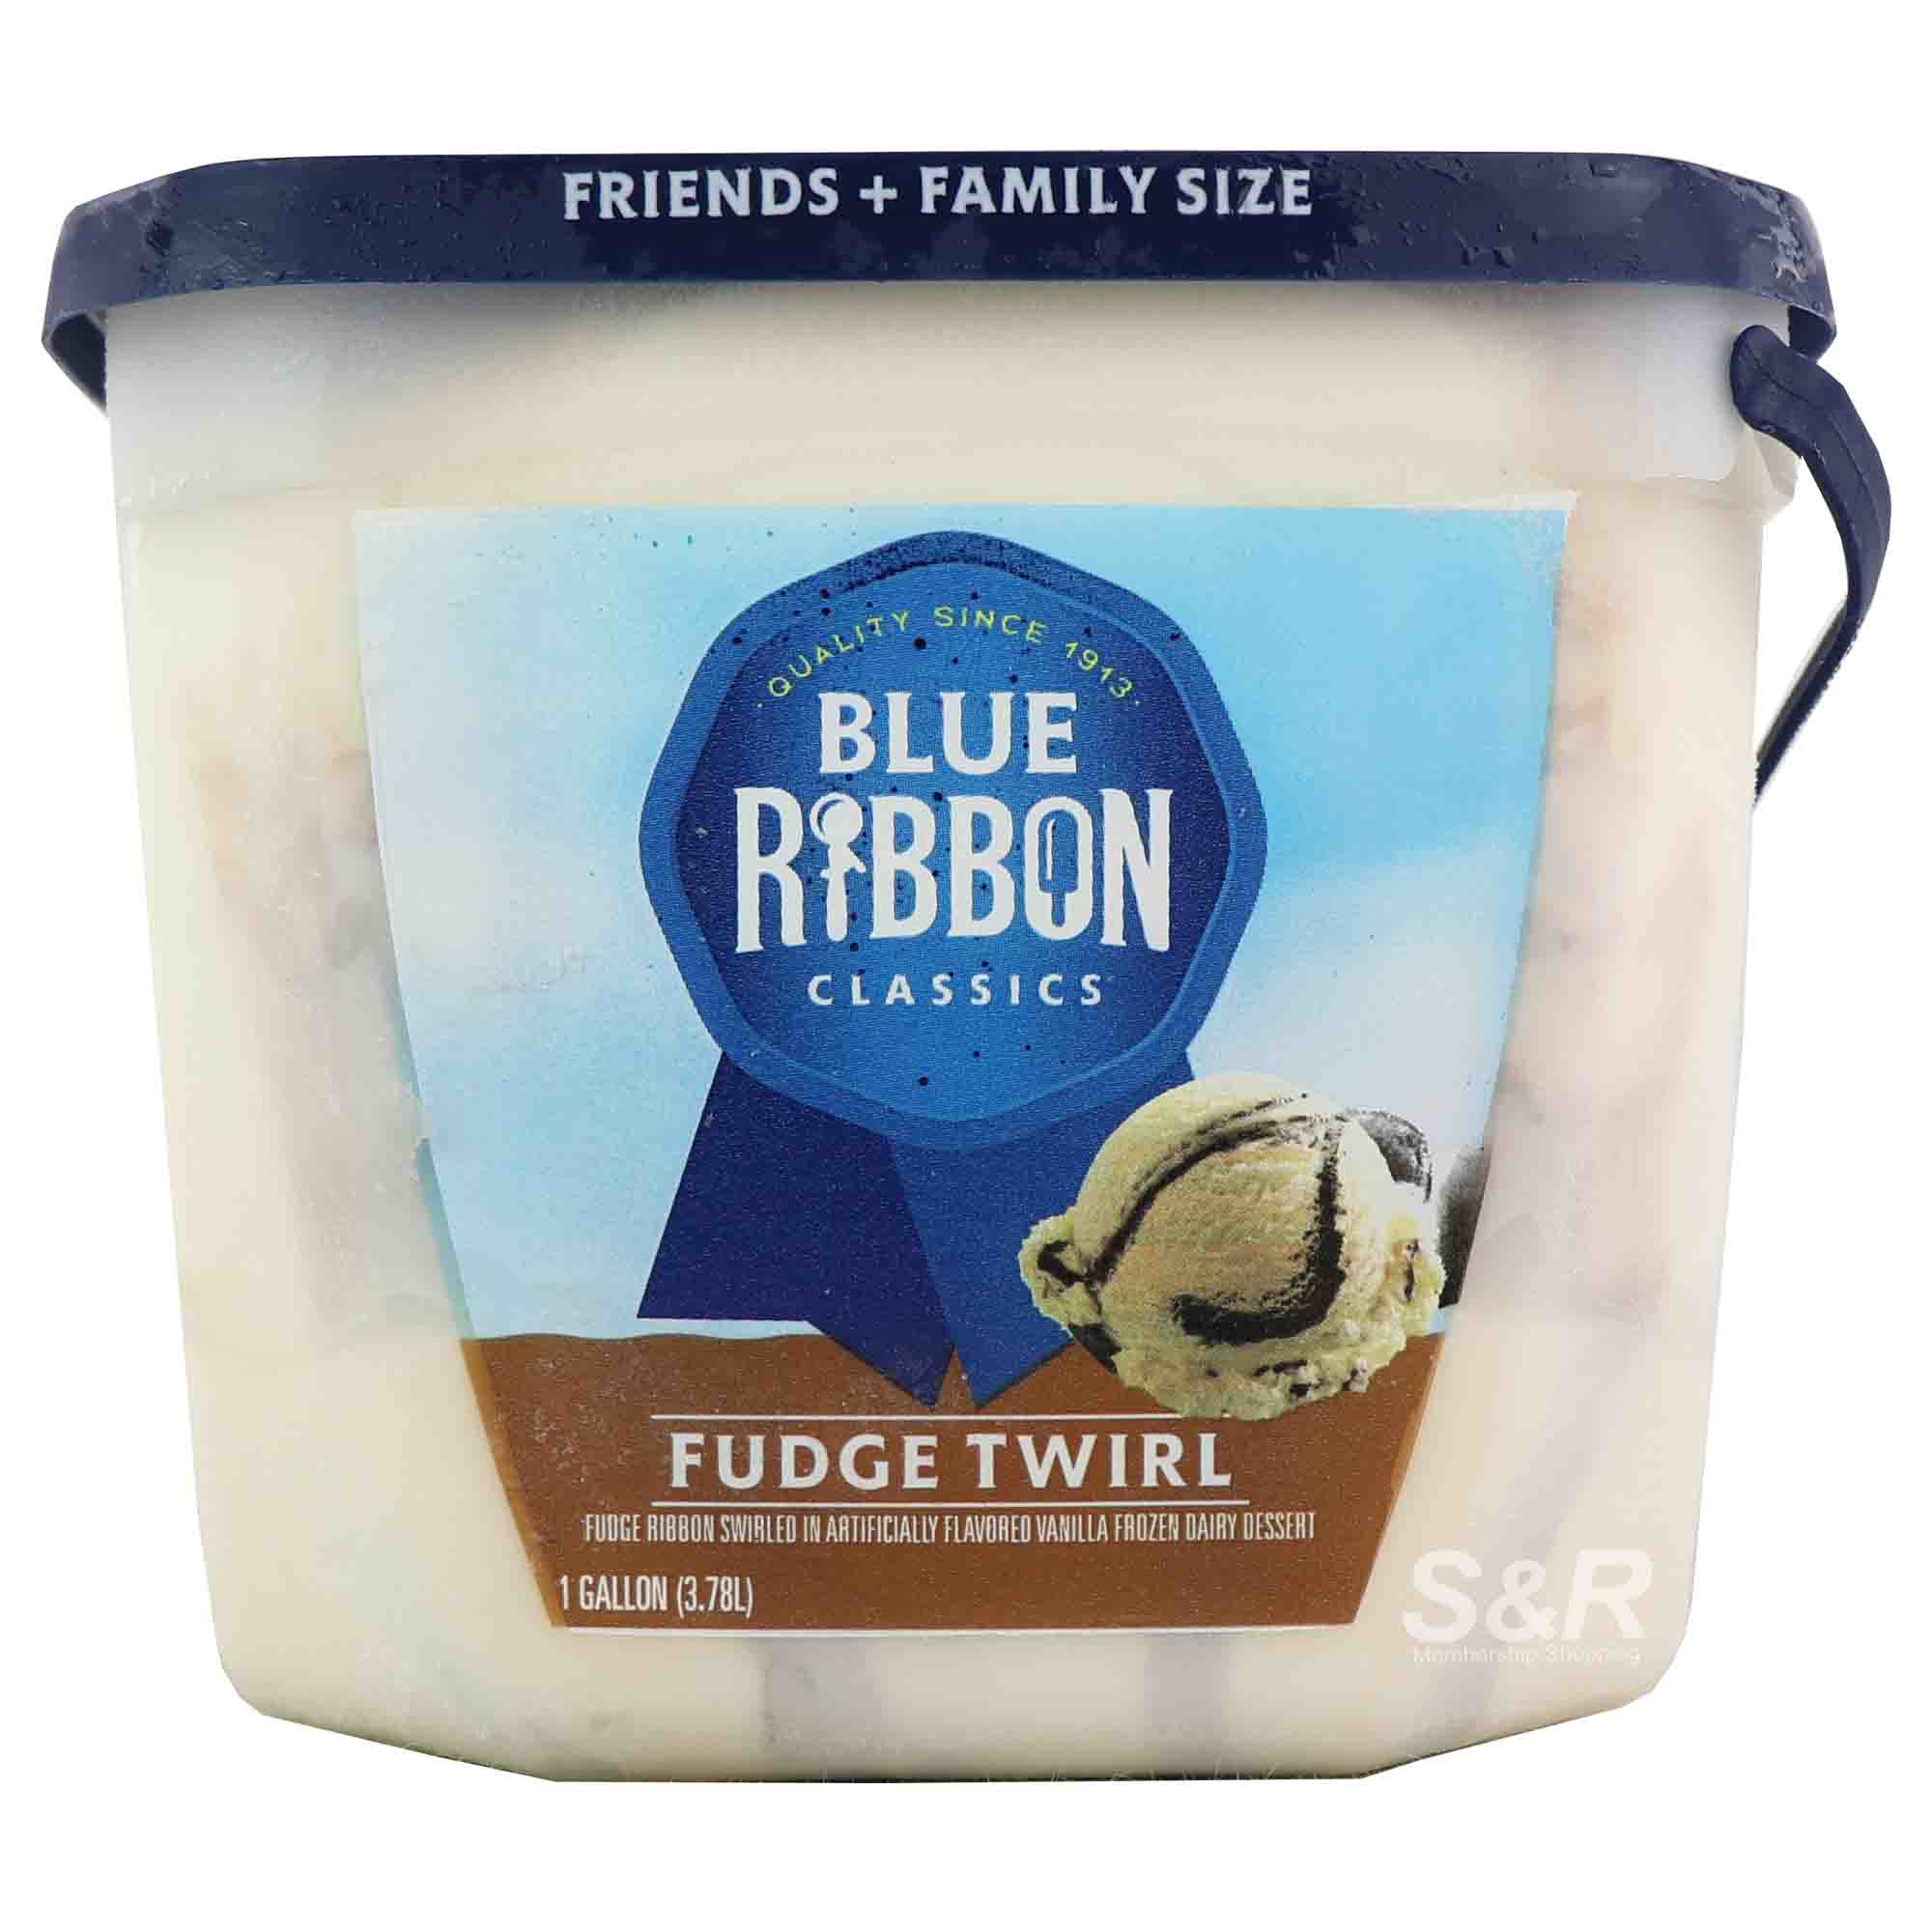 Blue Ribbon Fudge Twirl Frozen Dairy Dessert 3.78L